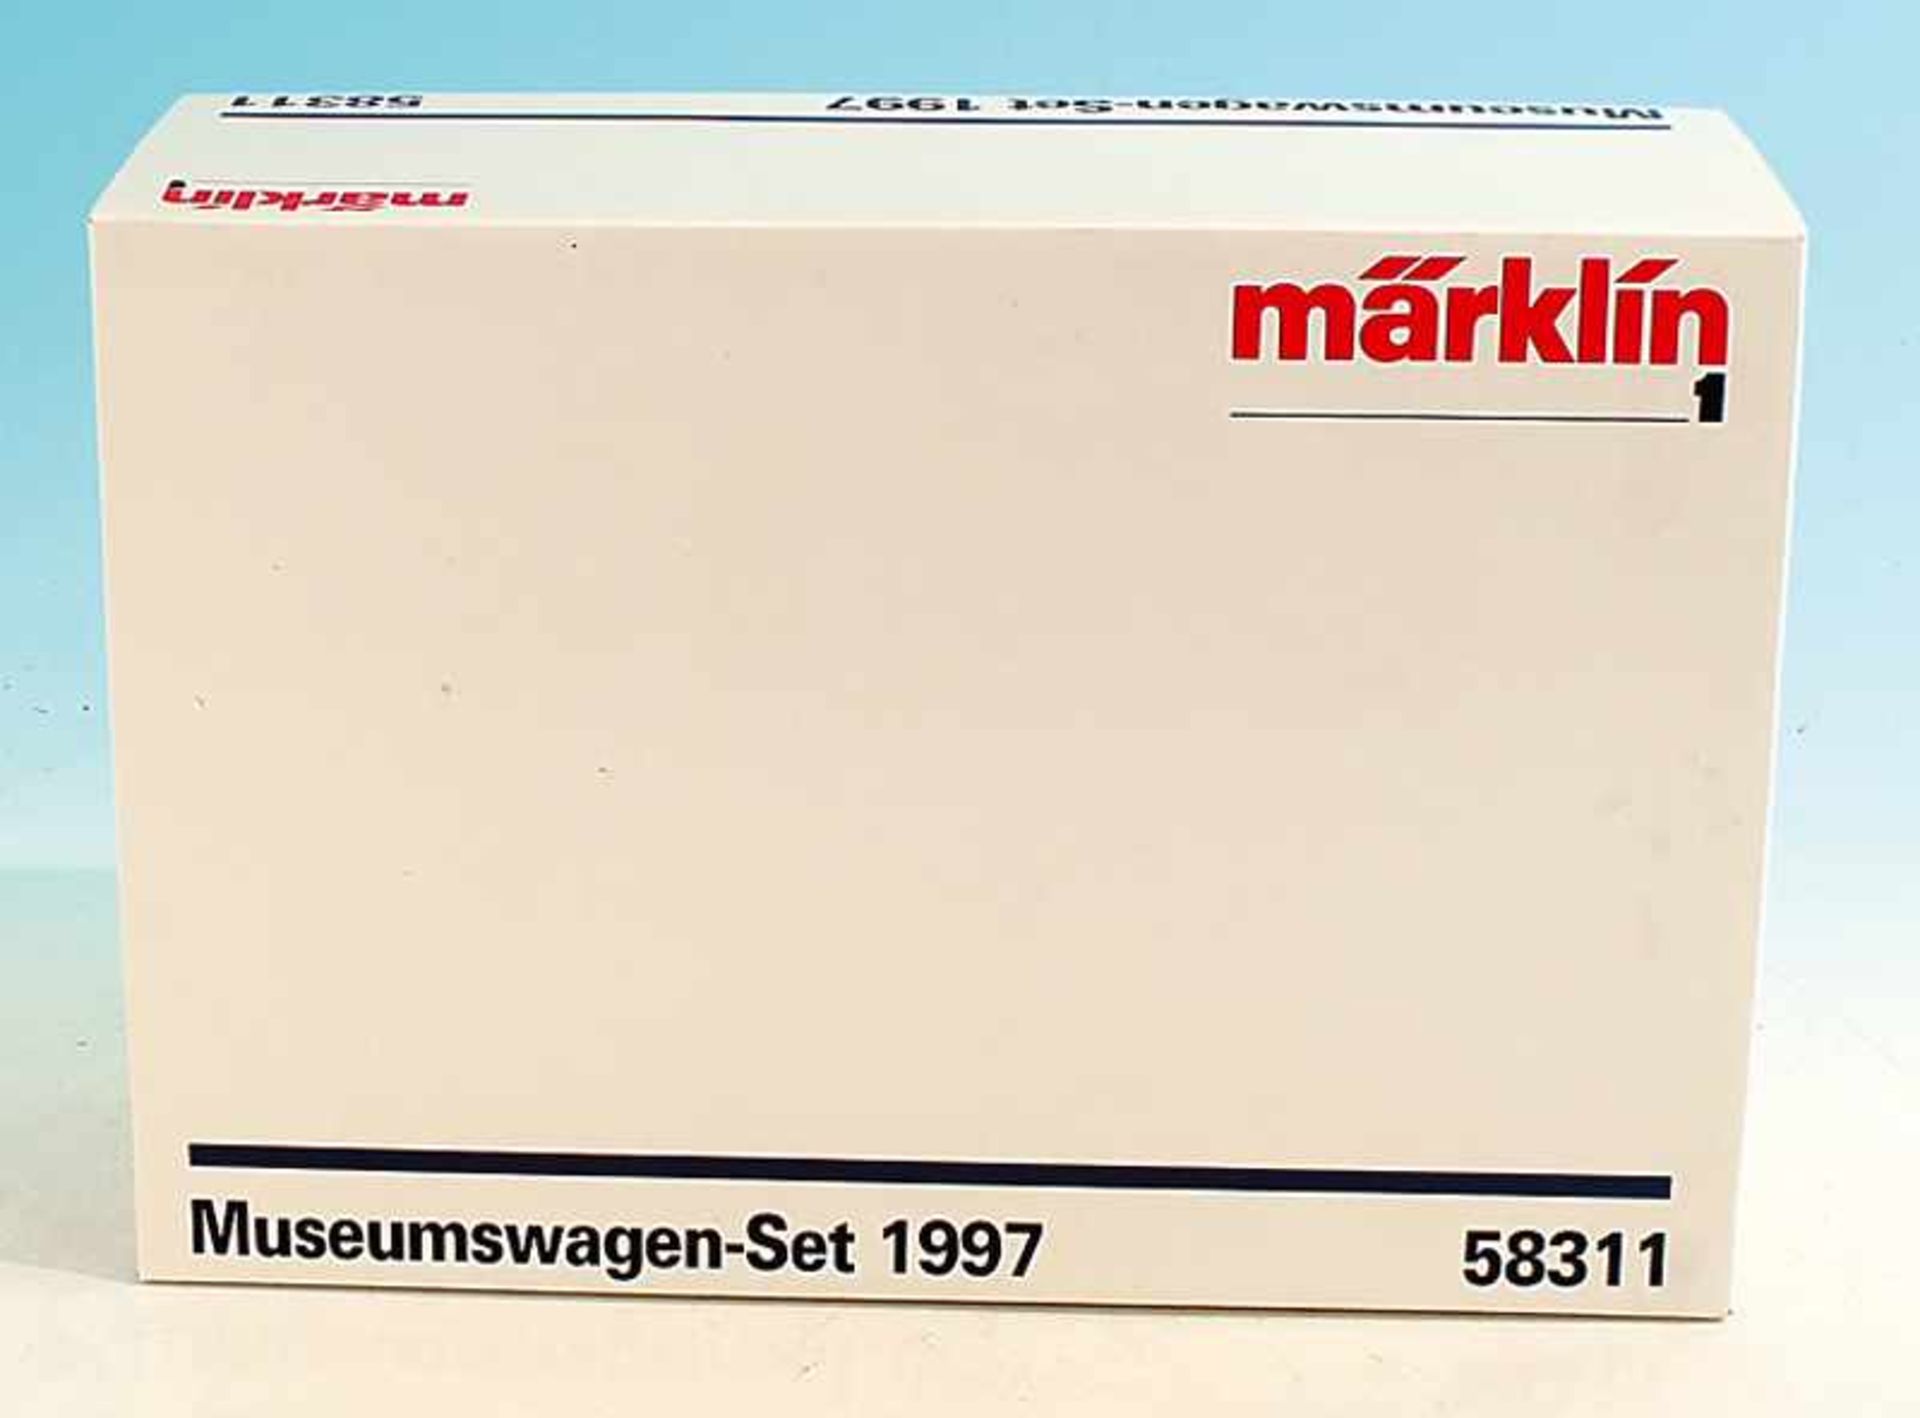 MARKLIN Museumswagen-Set 1997, 58311